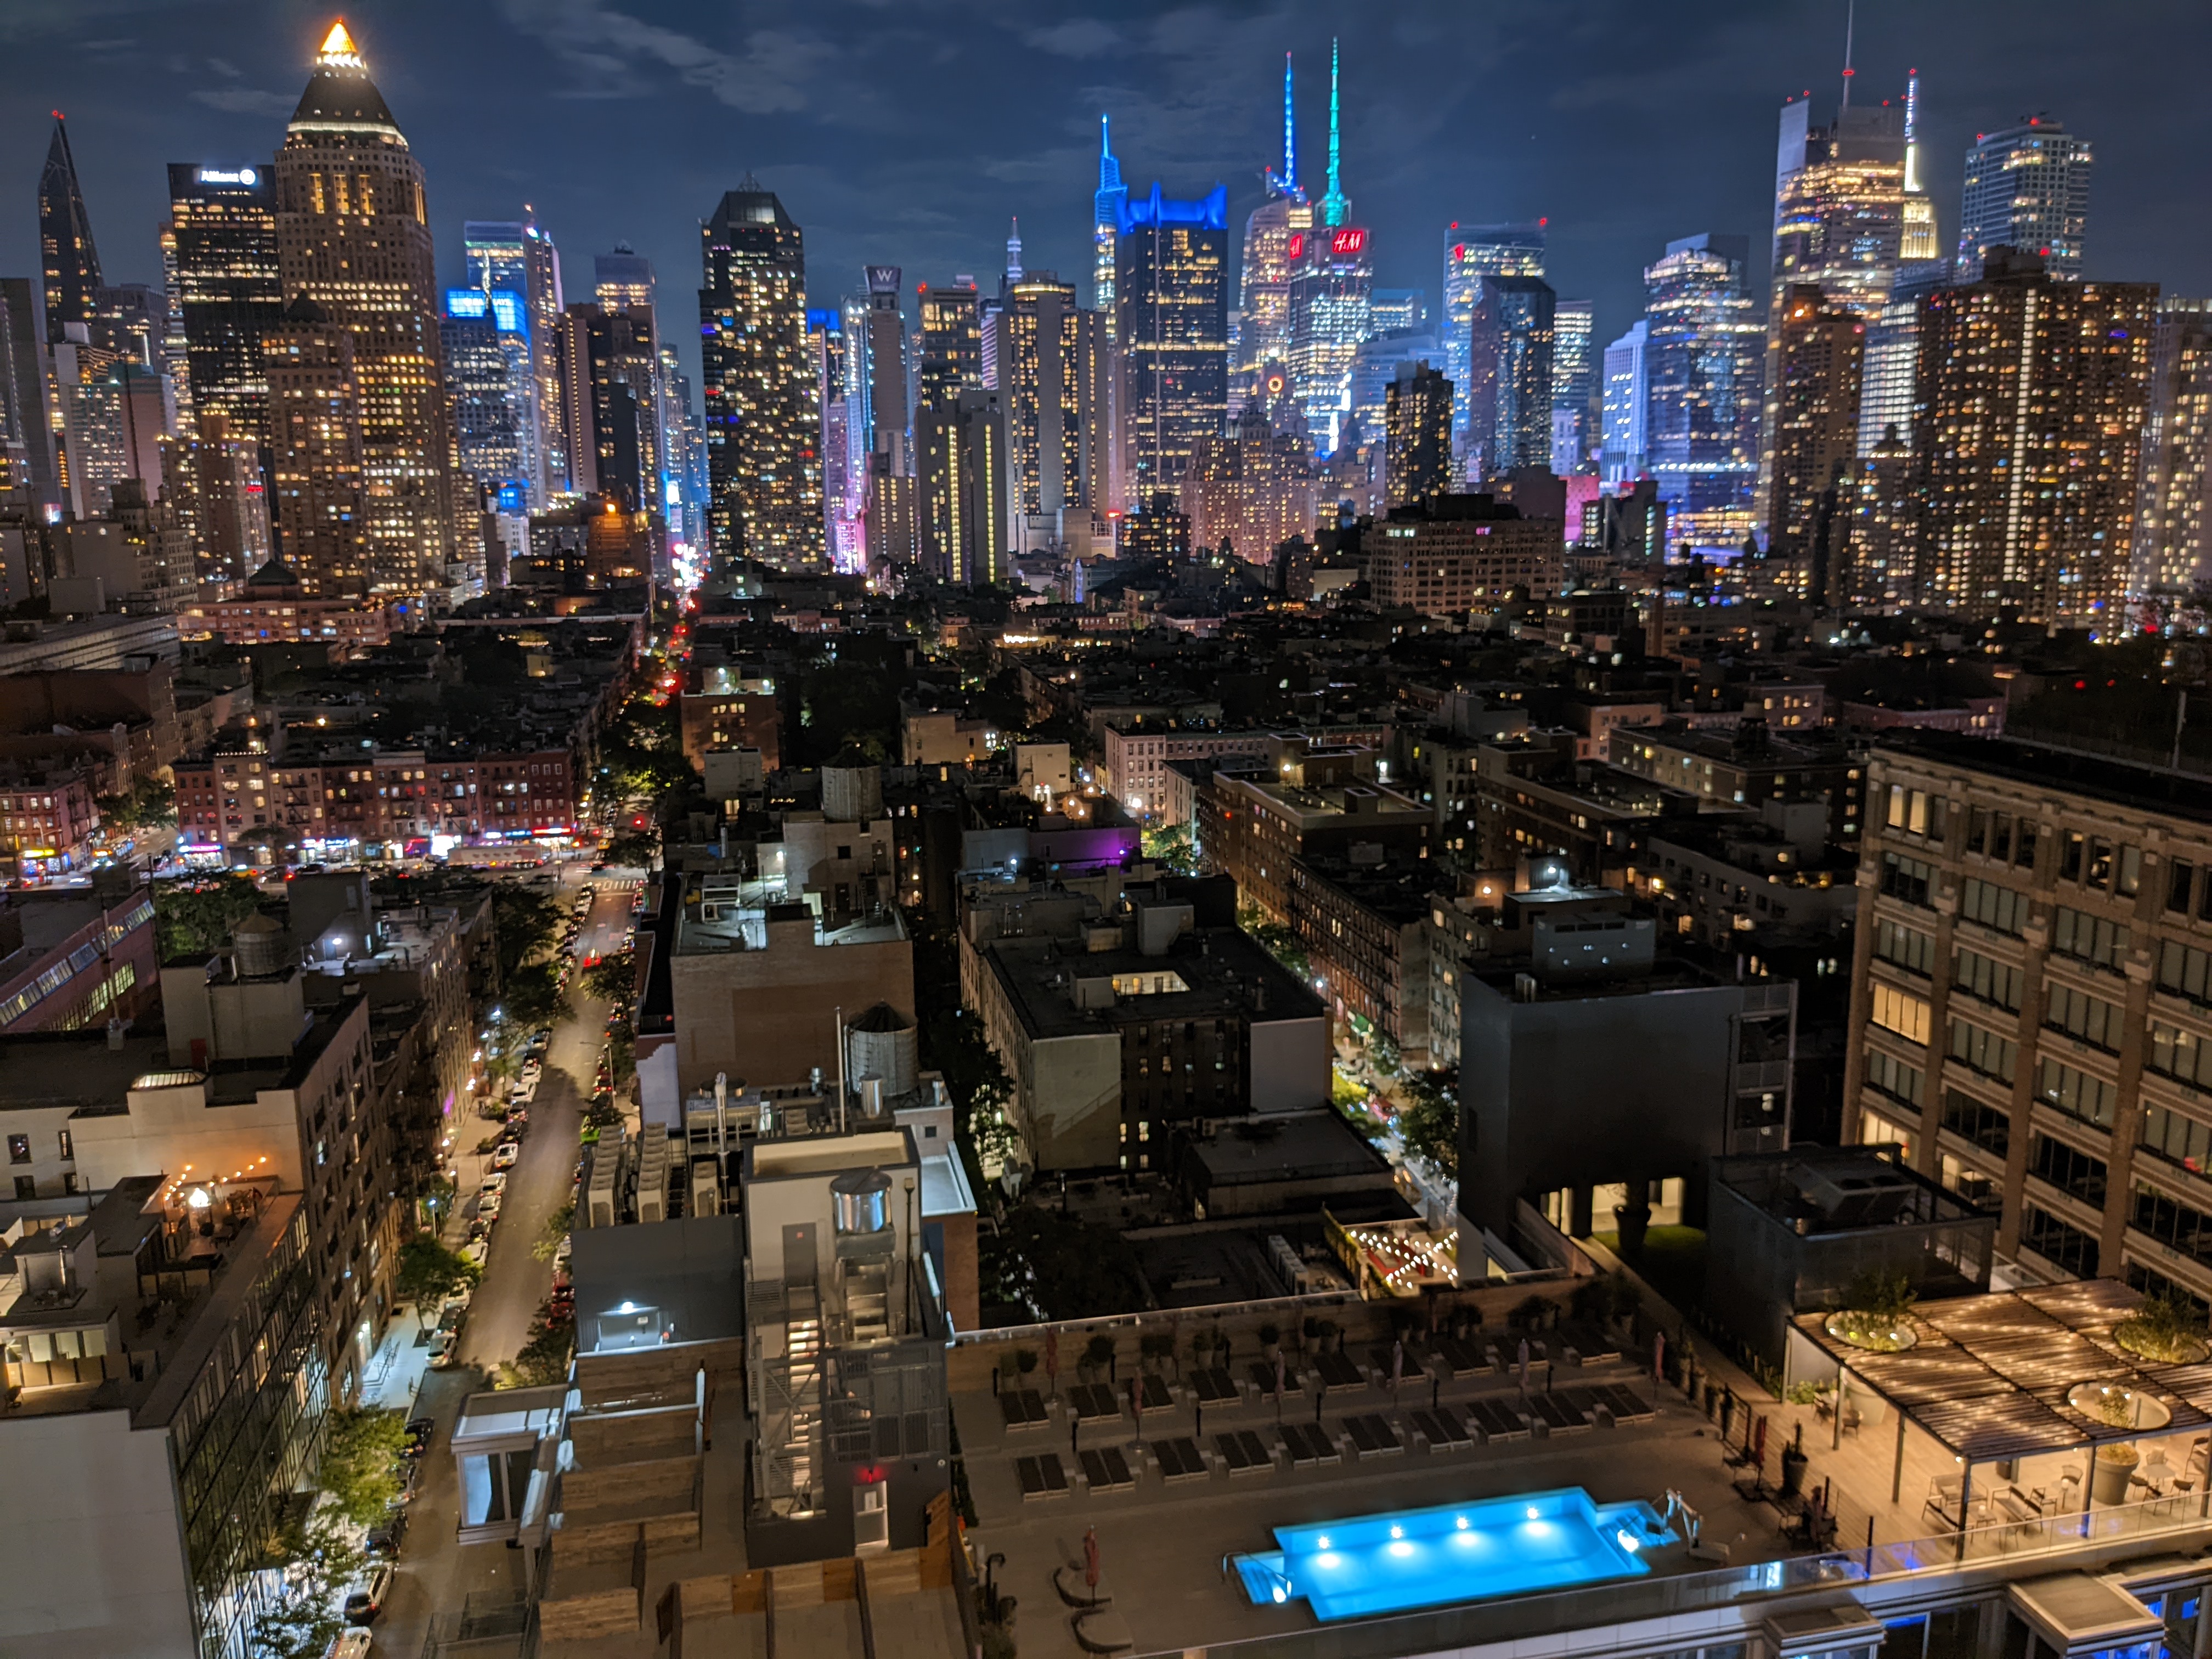 Night sight, New York skyline from INK48, 1/3s, f/1.7, ISO49, 4mm, 27mm equivalent, photo: Joshua Waller